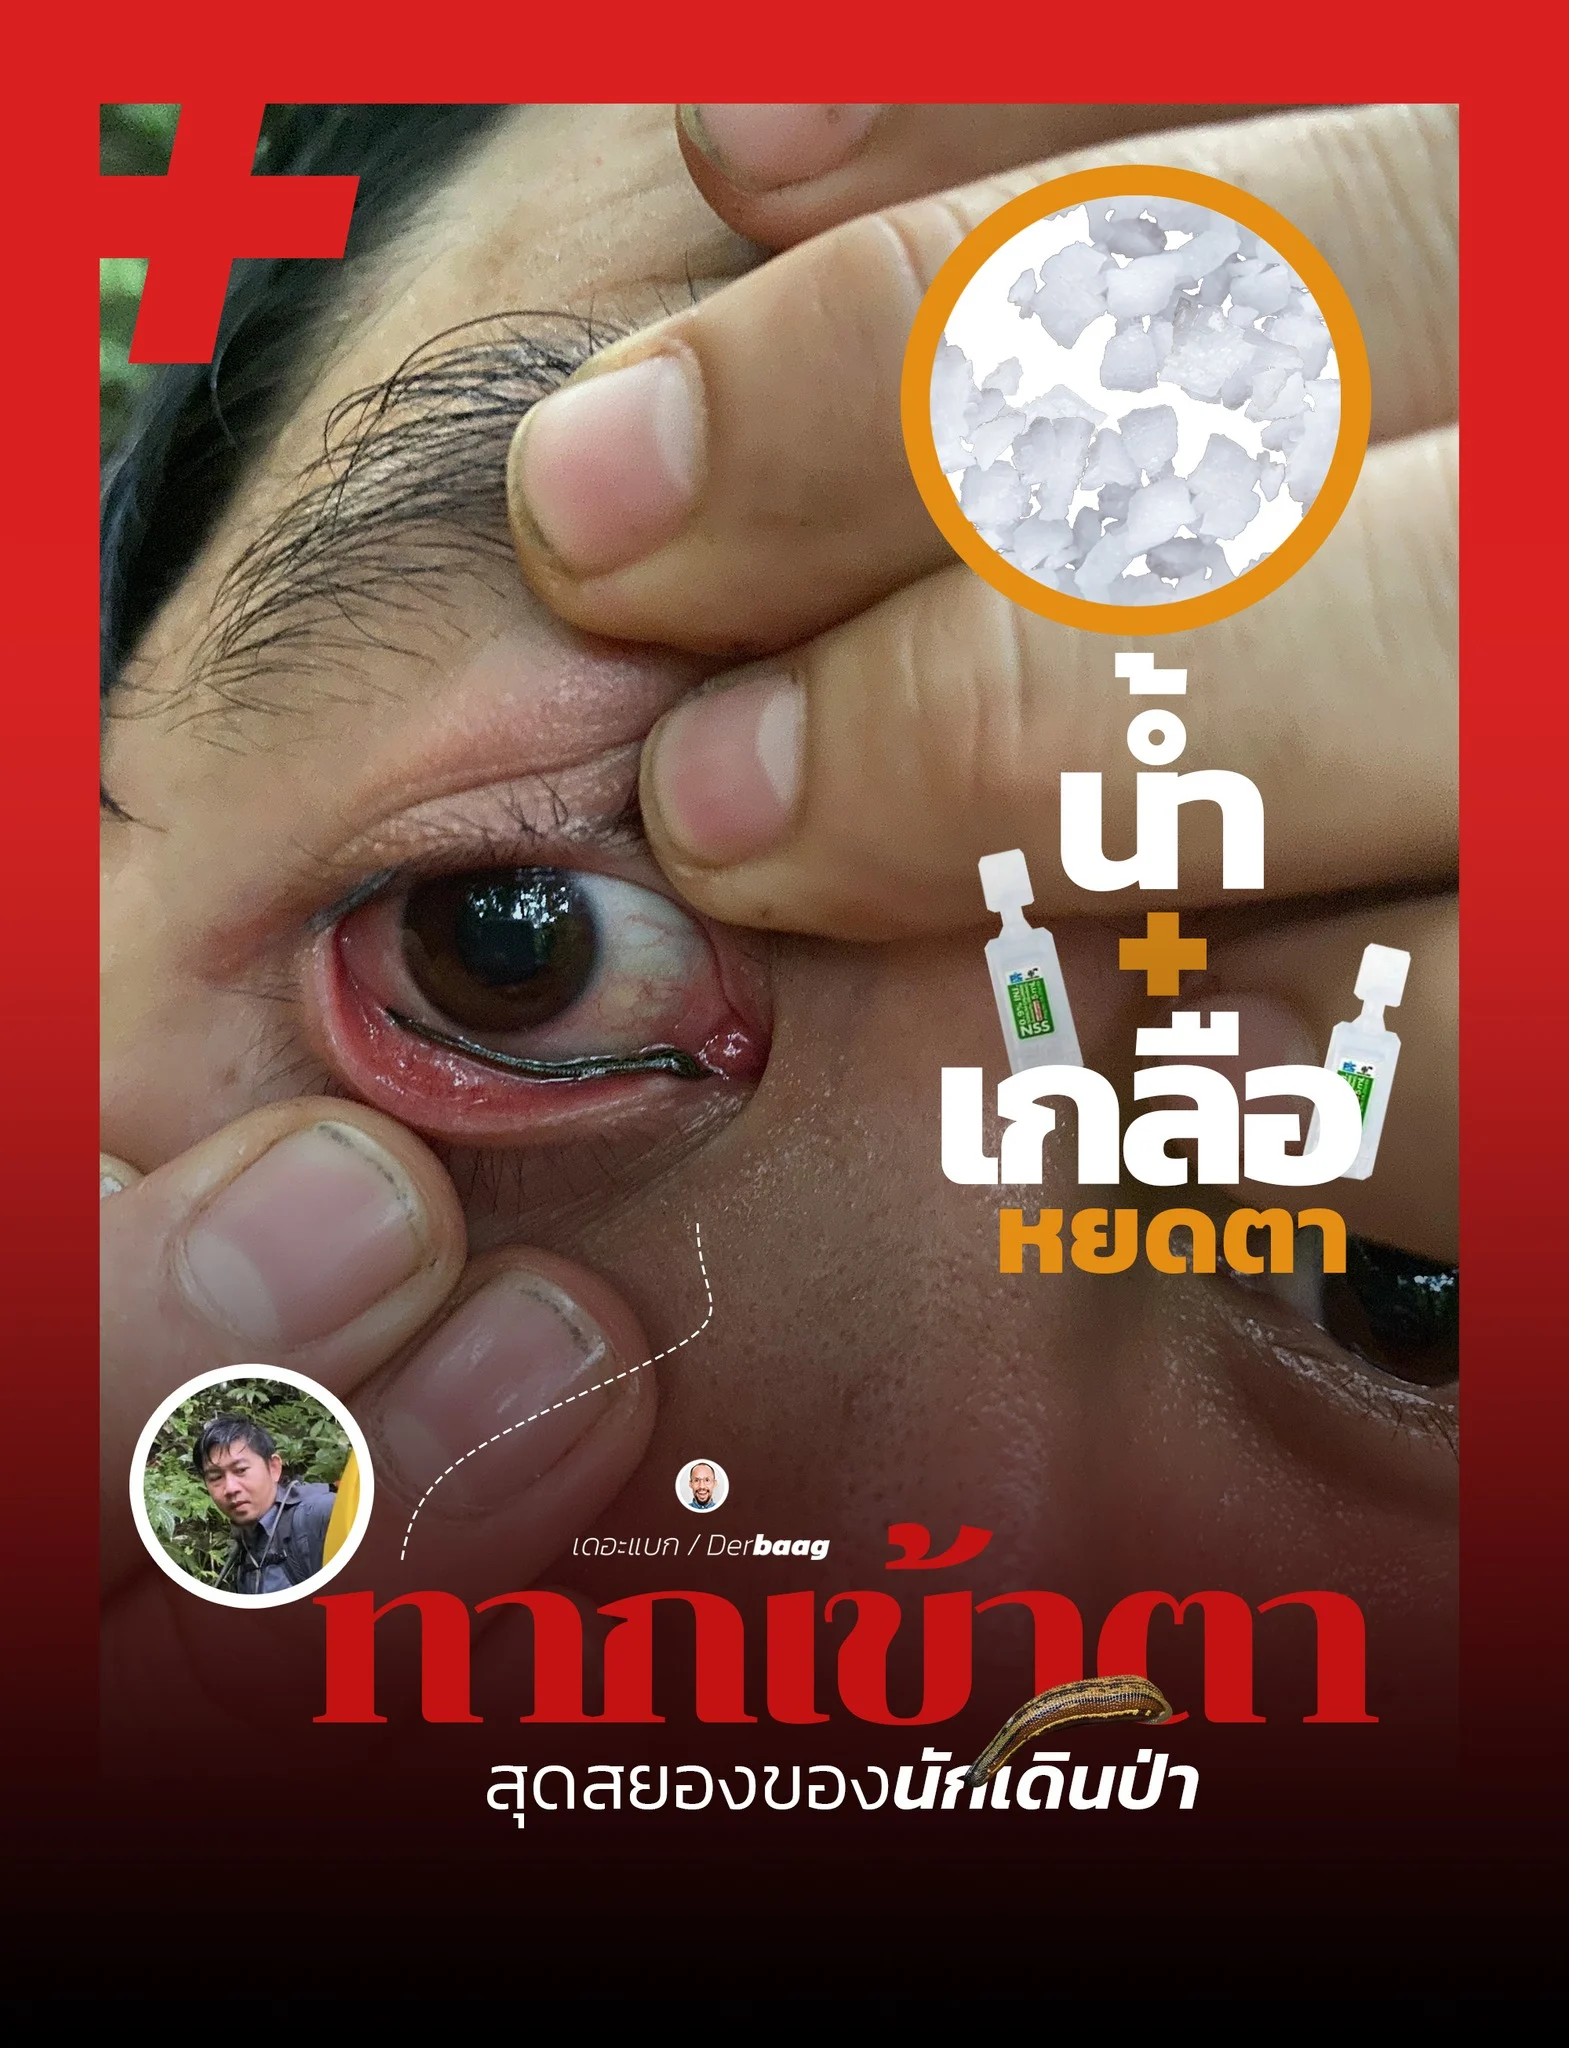 Leech crawls into man's eye in thailand